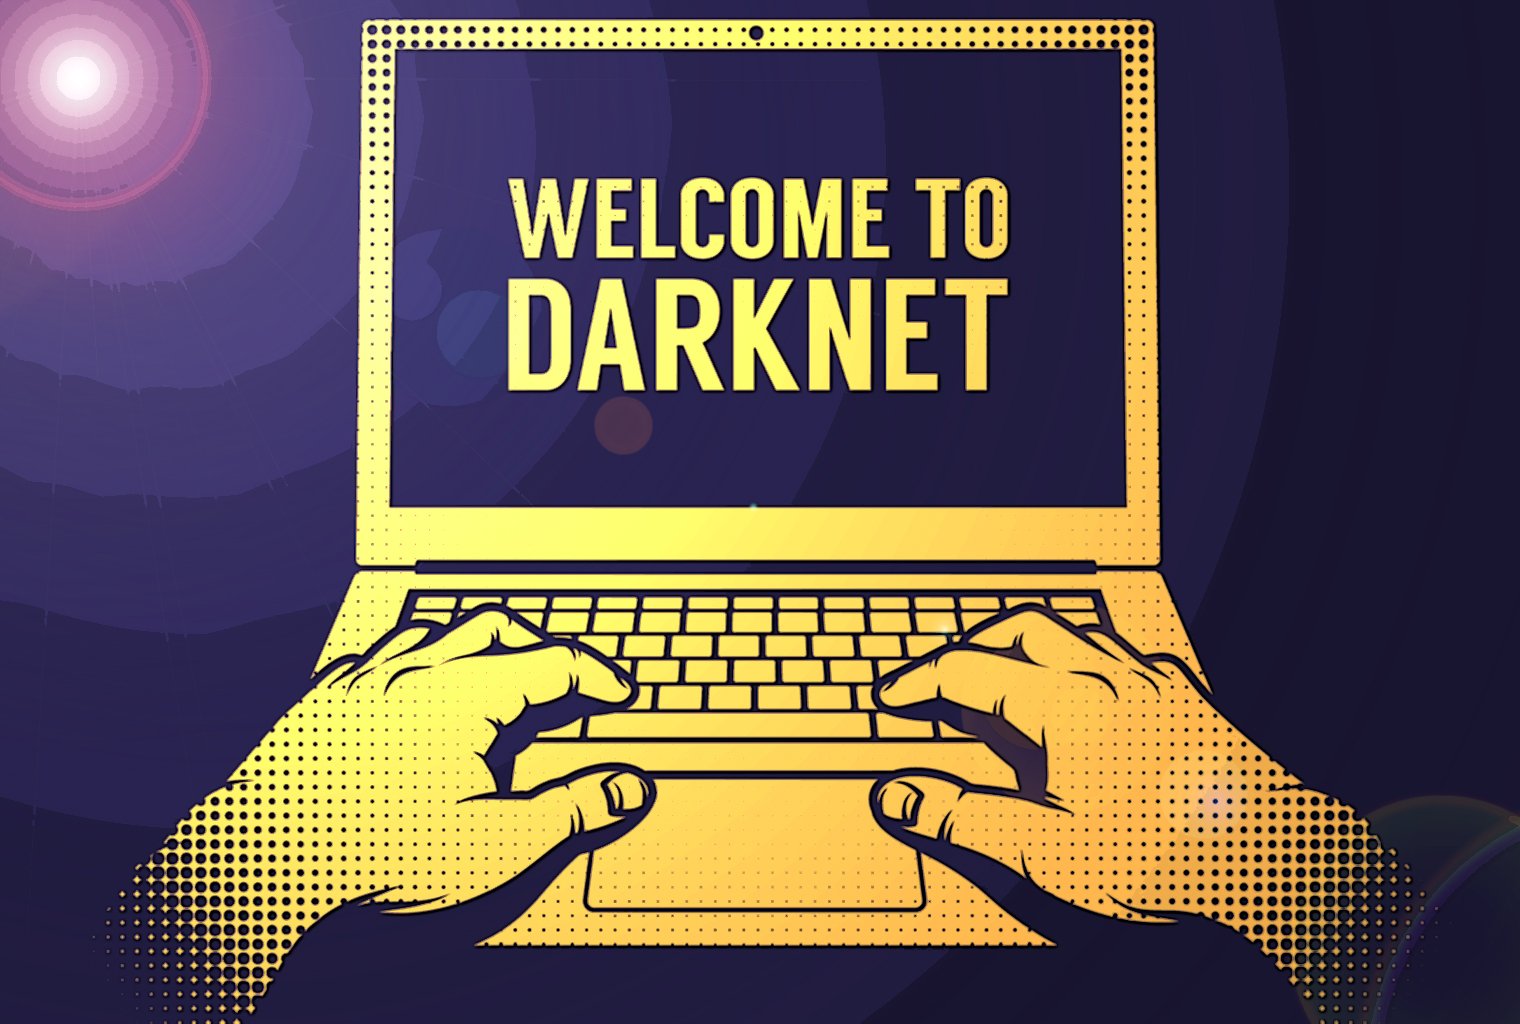 Darknet netflix gydra не могу через тор зайти на сайт гидра